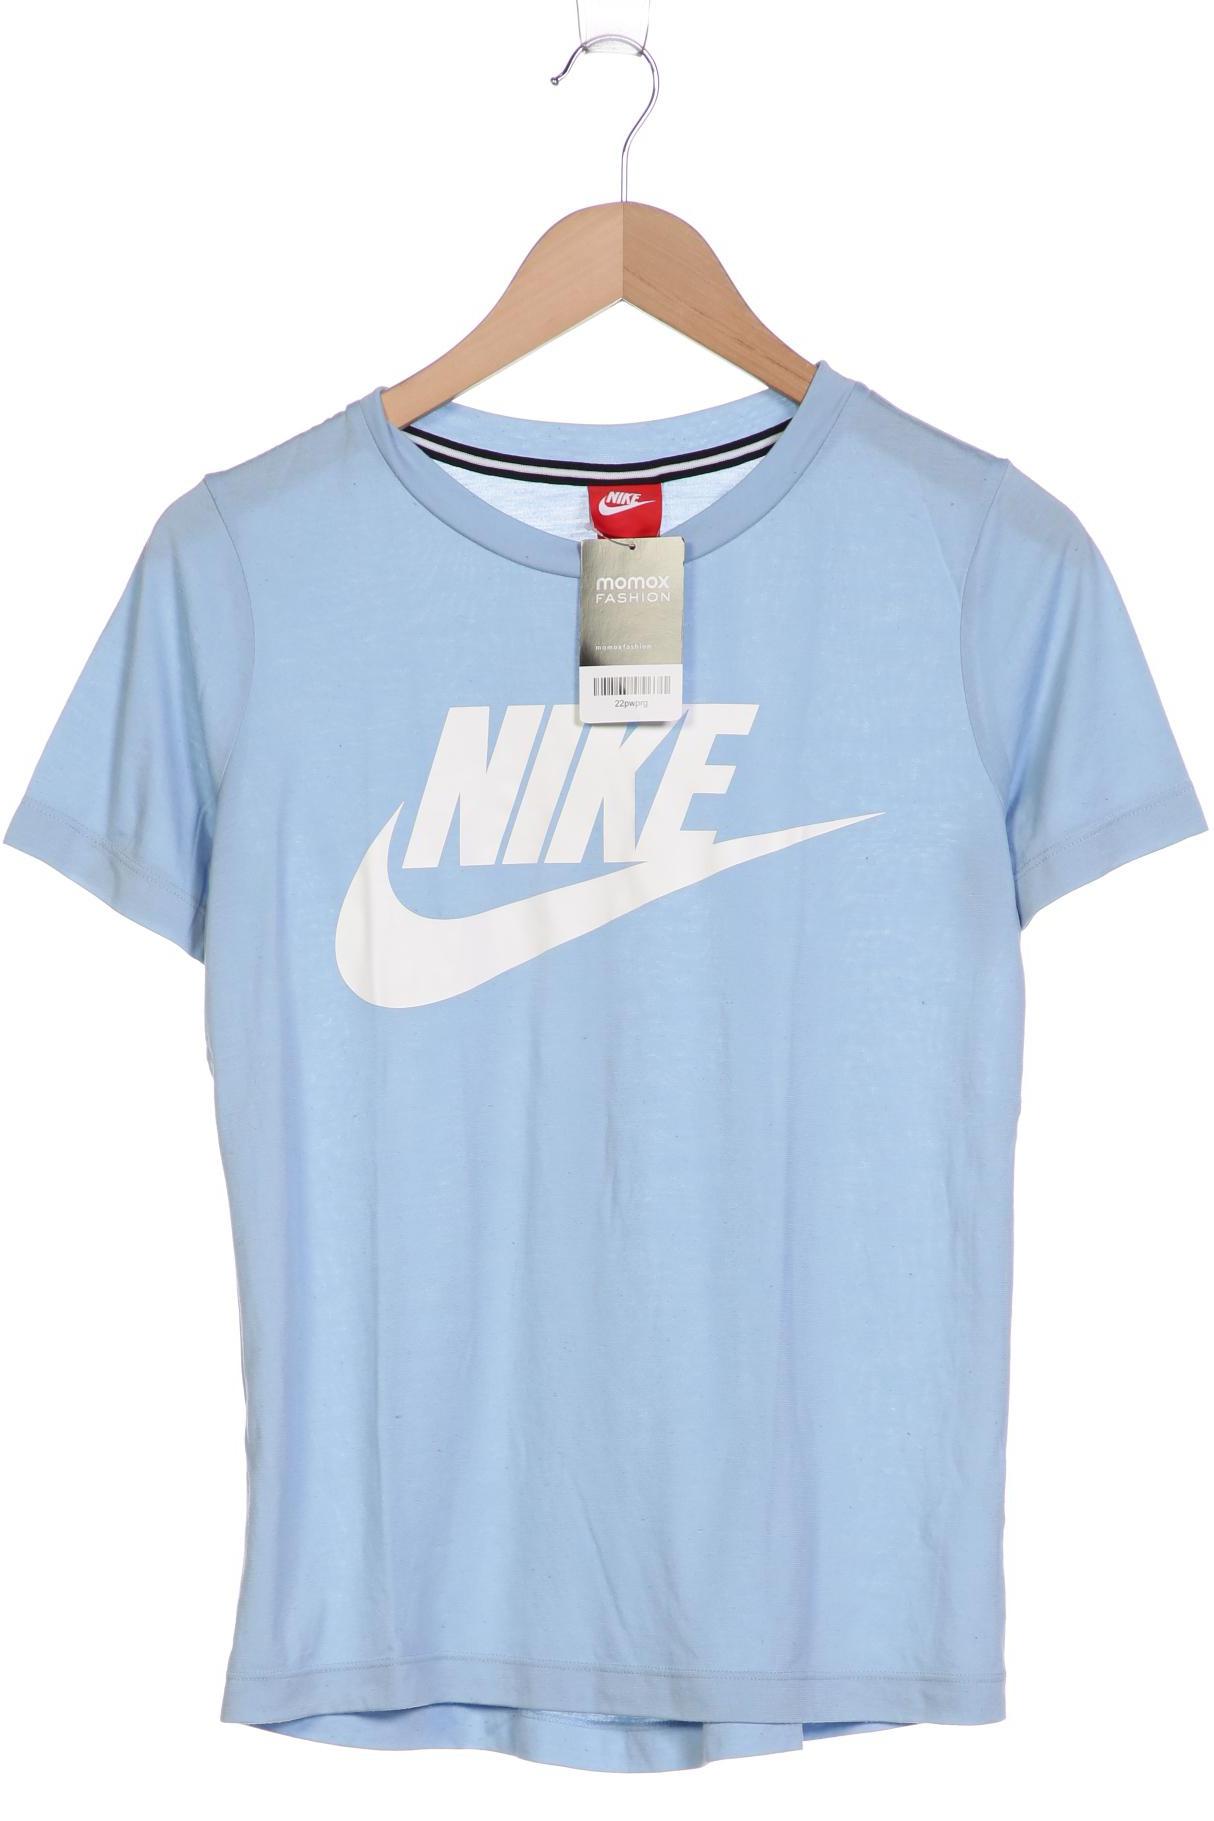 Nike Damen T-Shirt, hellblau von Nike